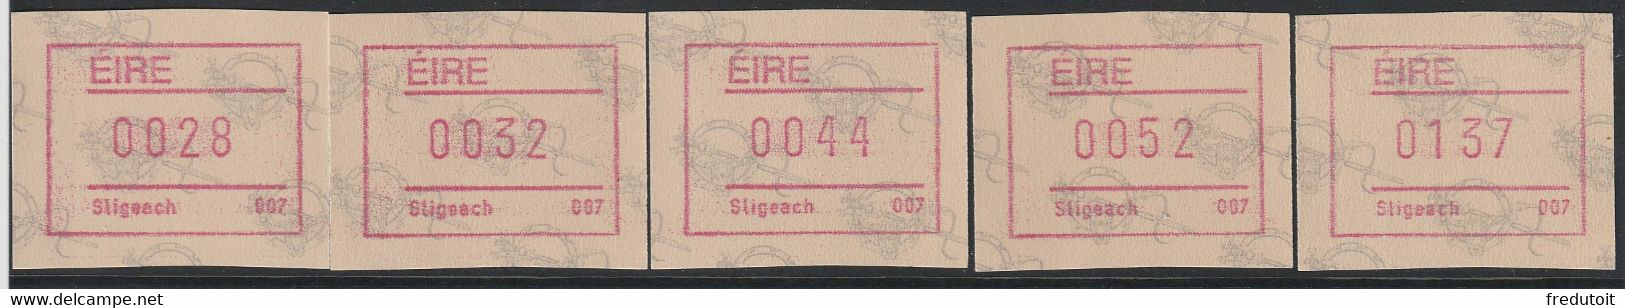 IRLANDE - Timbres Distributeurs / FRAMA  ATM - N°4** (1992) Sligeach 007 - Franking Labels